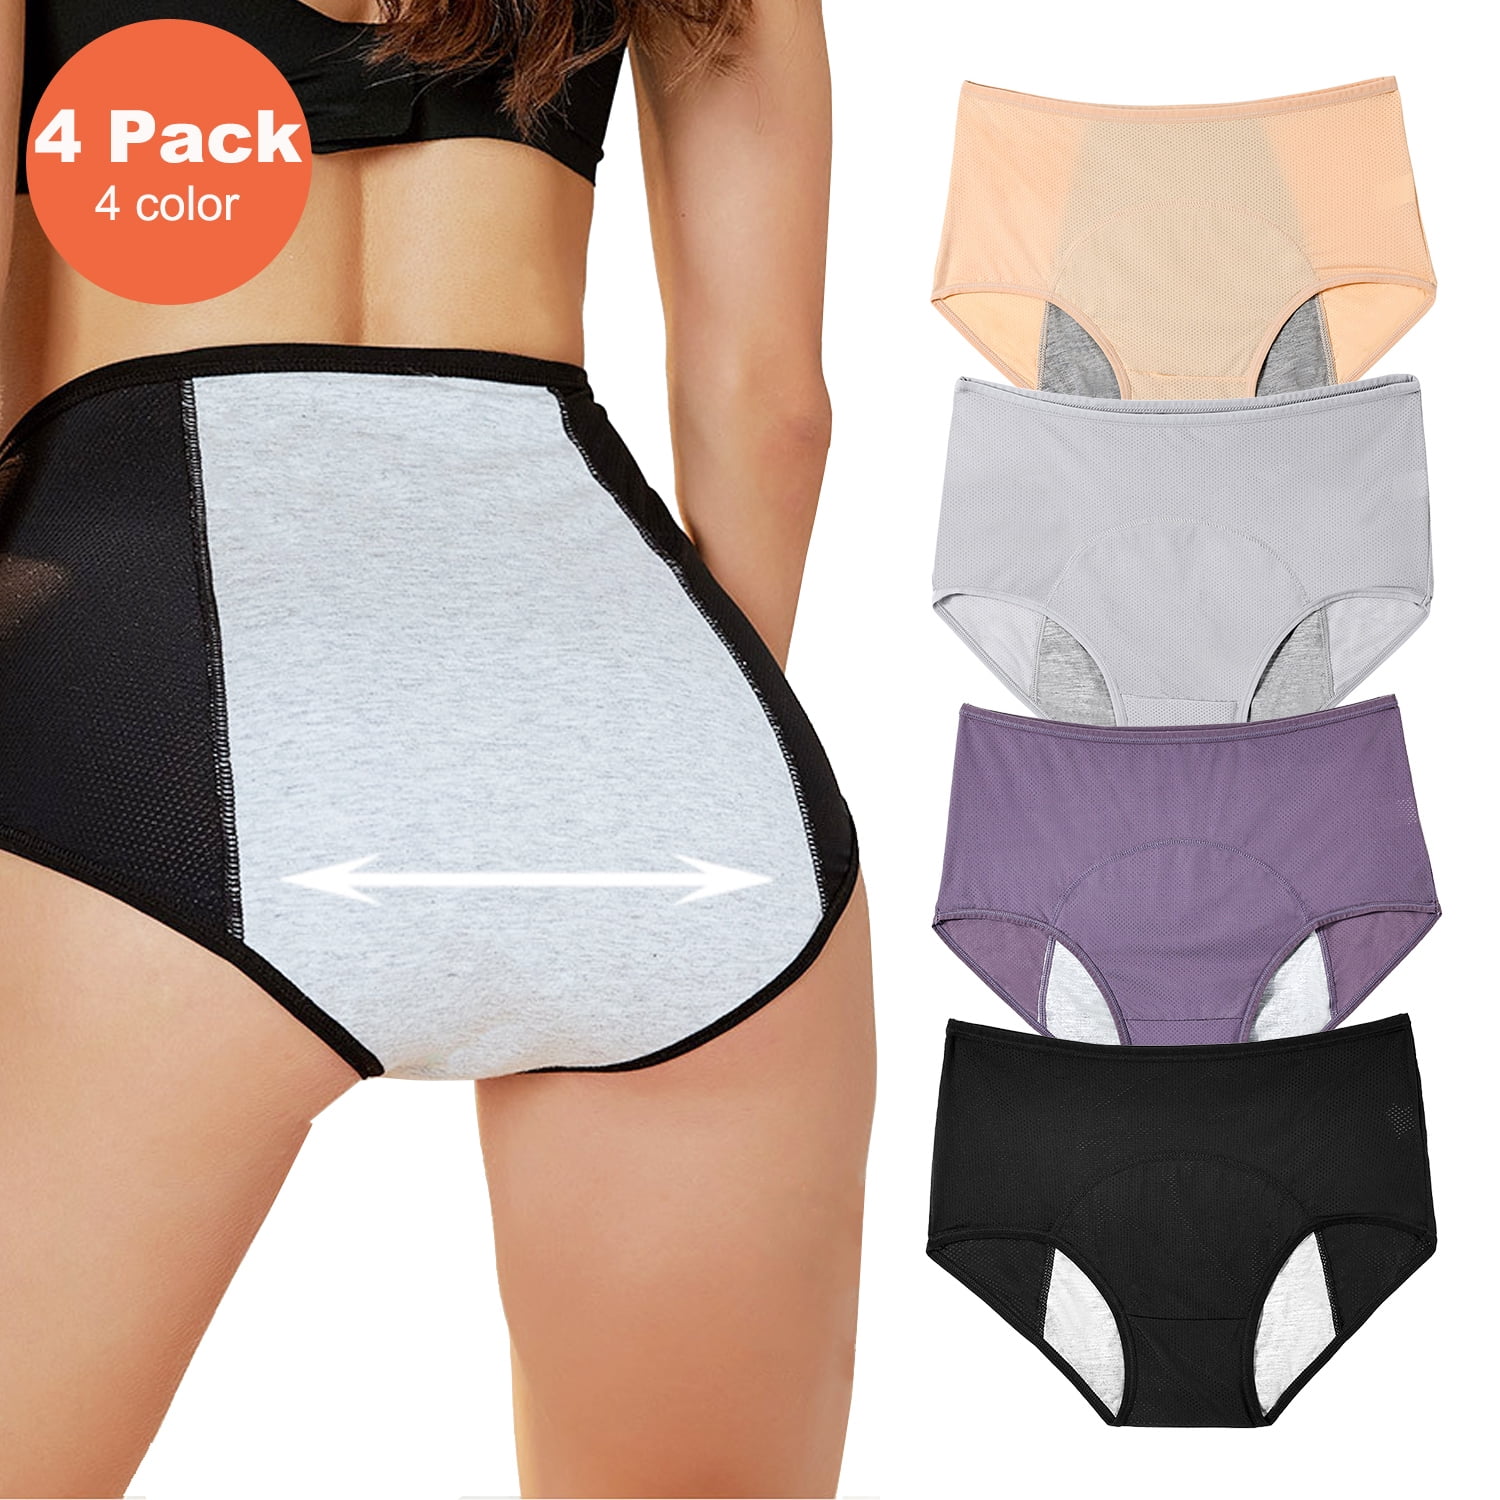 Anrpo Period Underwear for Women, High Waist Leak-Proof Postpartum Menstrual  Panties Ladies Protective Briefs - 4 Pack (L,4 Color) 